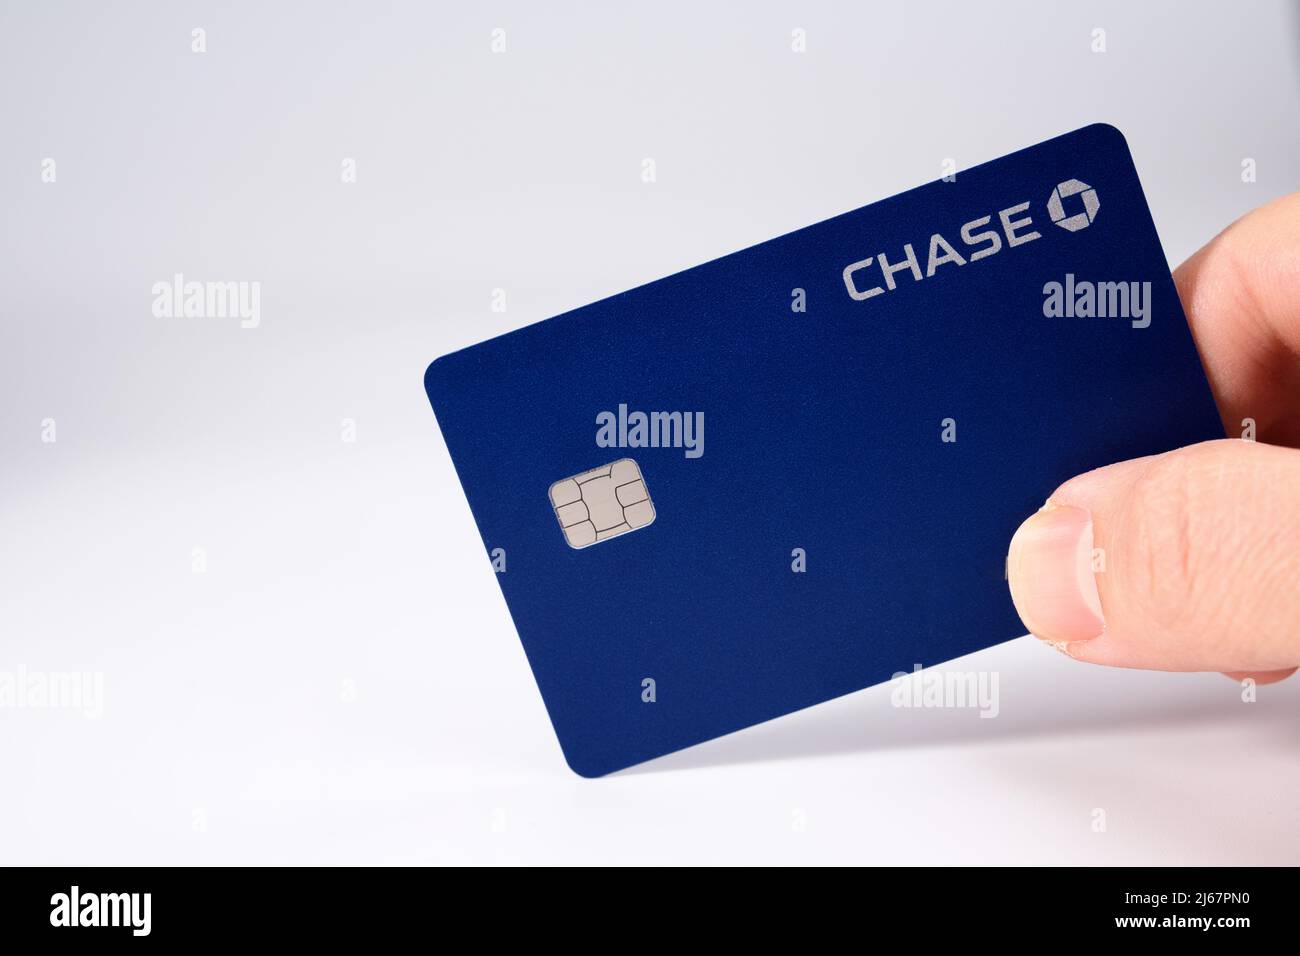 Chase Bank Card Immagini e Fotos Stock - Alamy